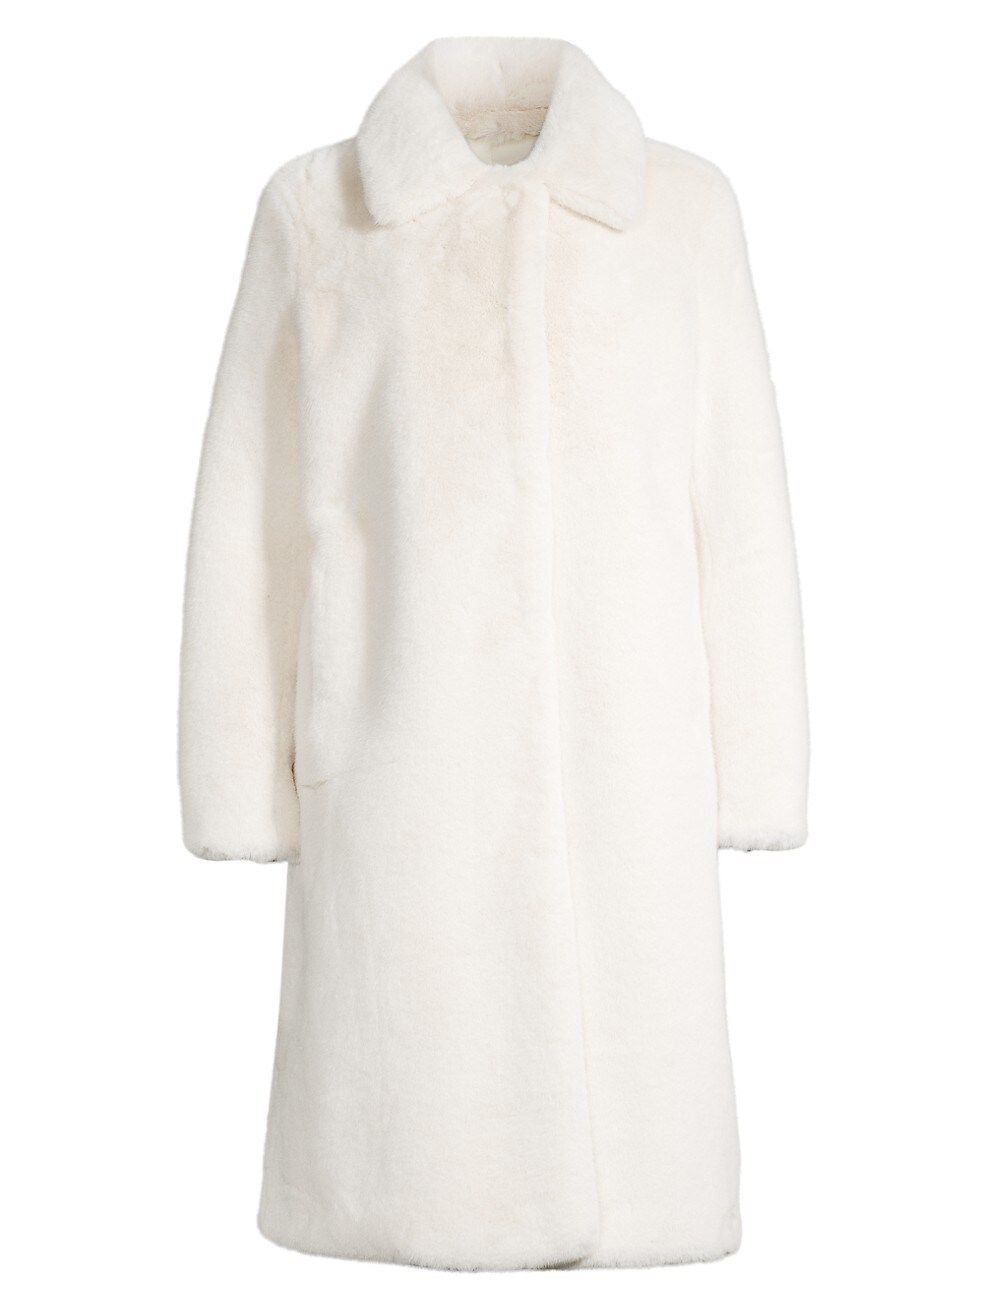 Donna Karan New York Oversized Faux Fur Coat | Saks Fifth Avenue